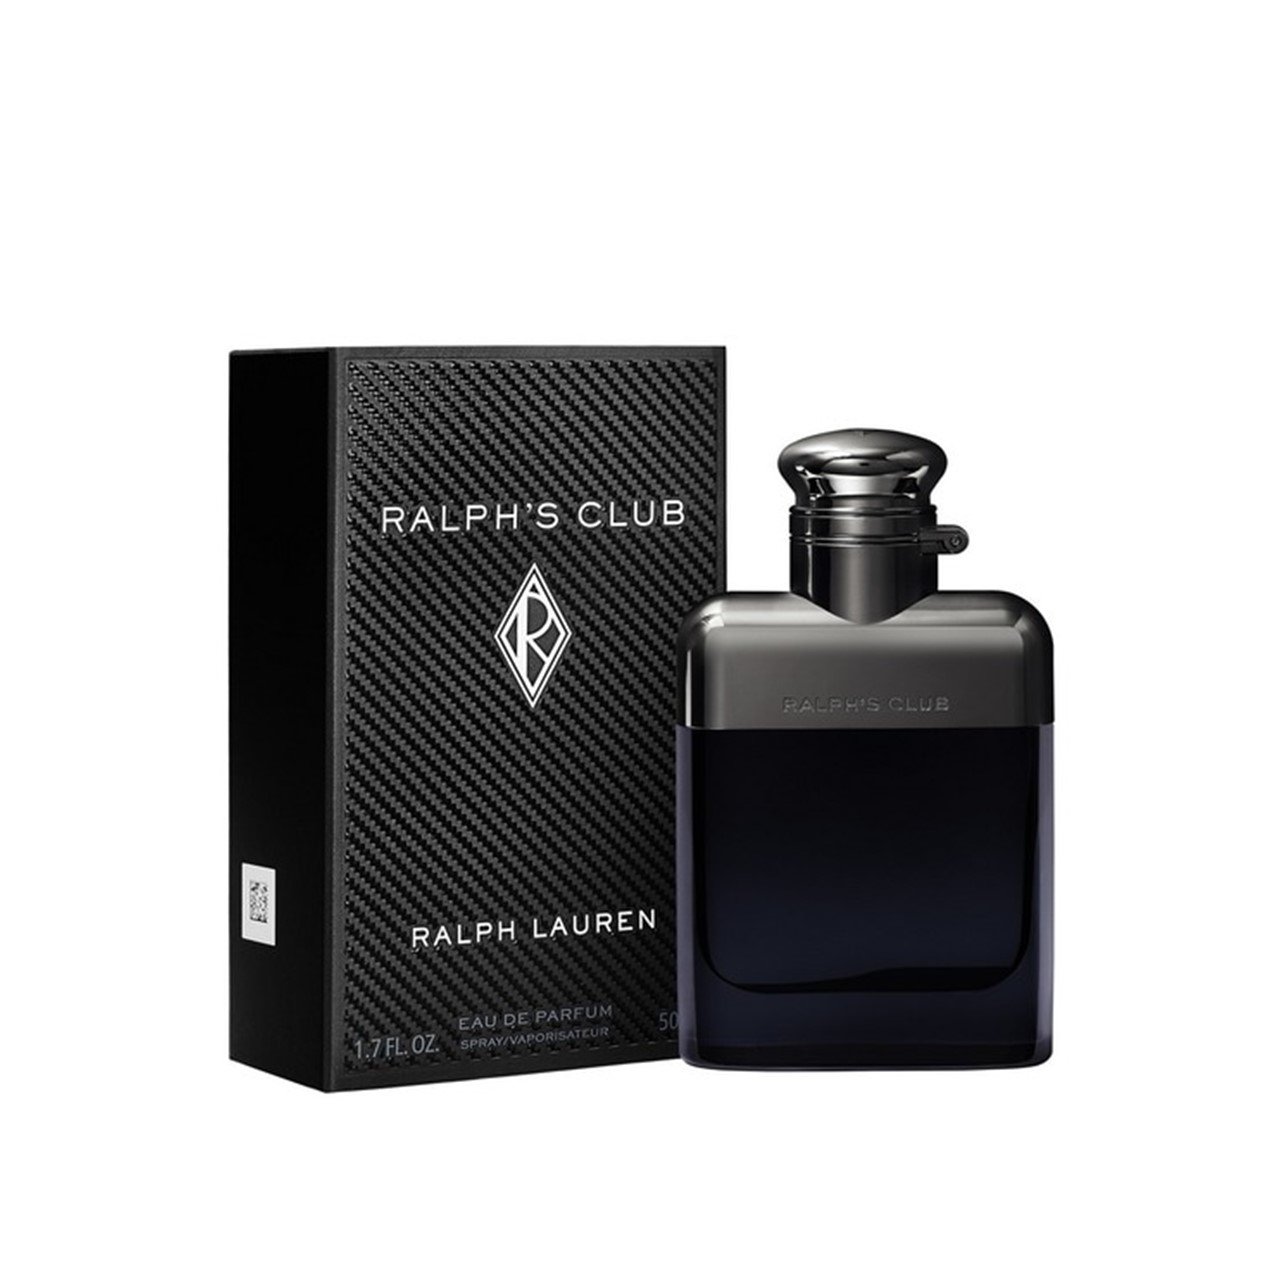 Buy Ralph Lauren Ralph's Club Eau de Parfum For Men 50ml · Turkey